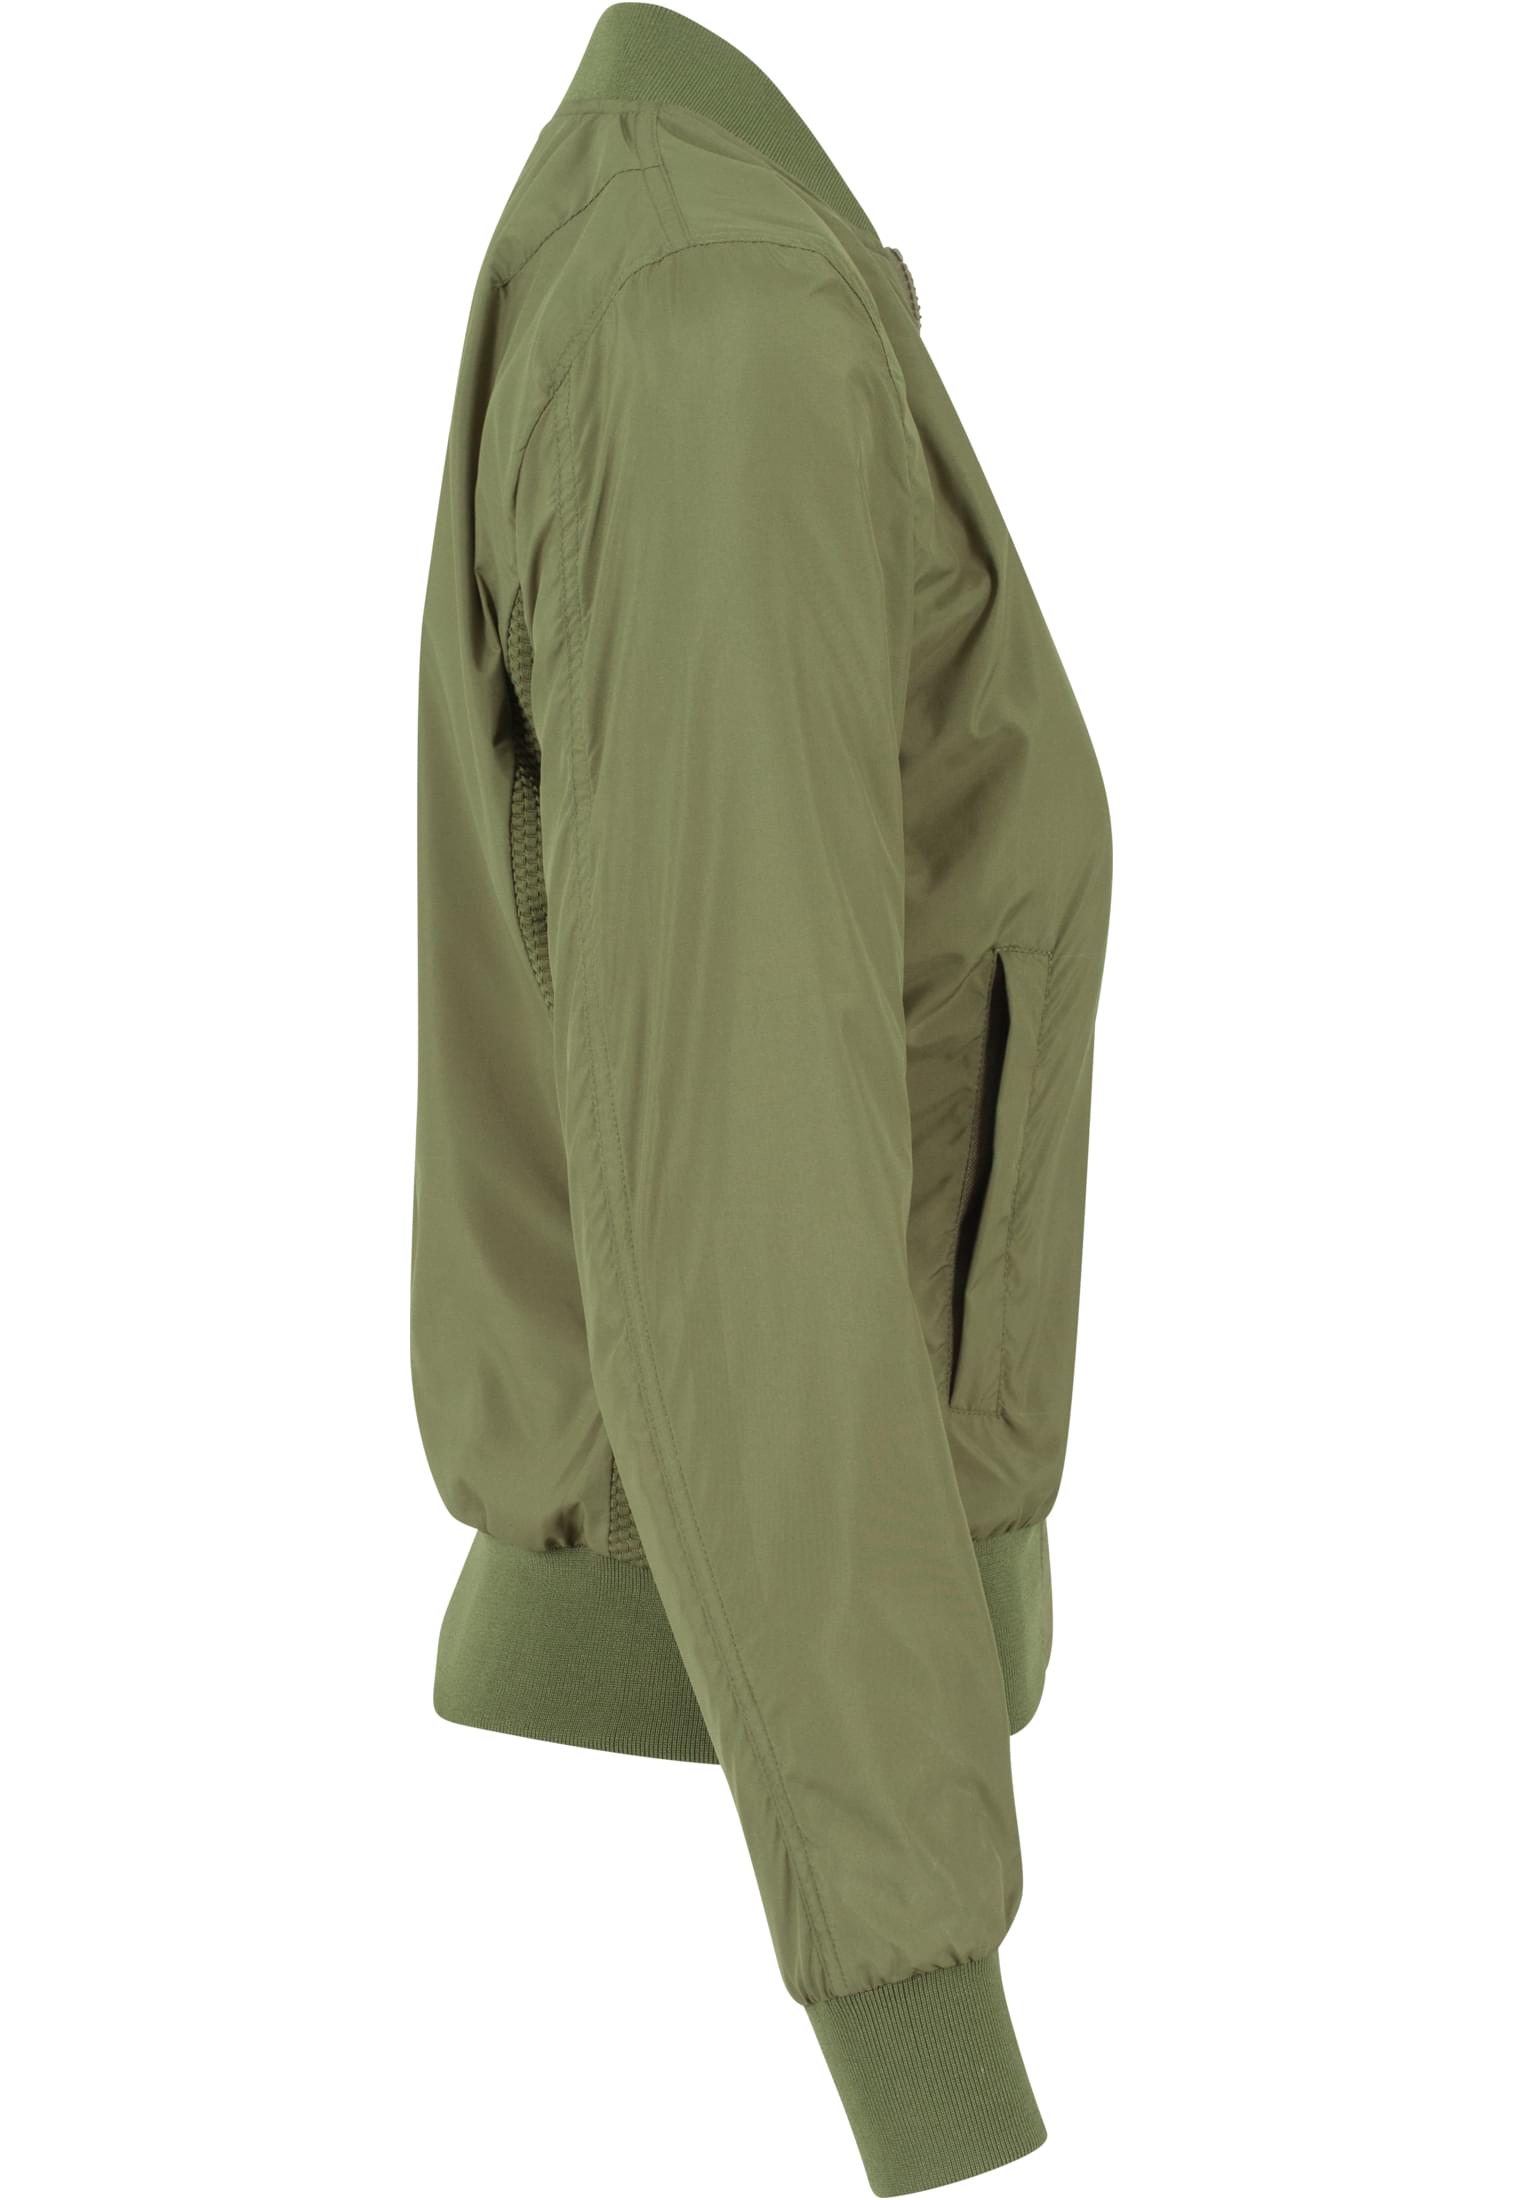 Frauen Ladies Light Bomber Jacket in Farbe olive